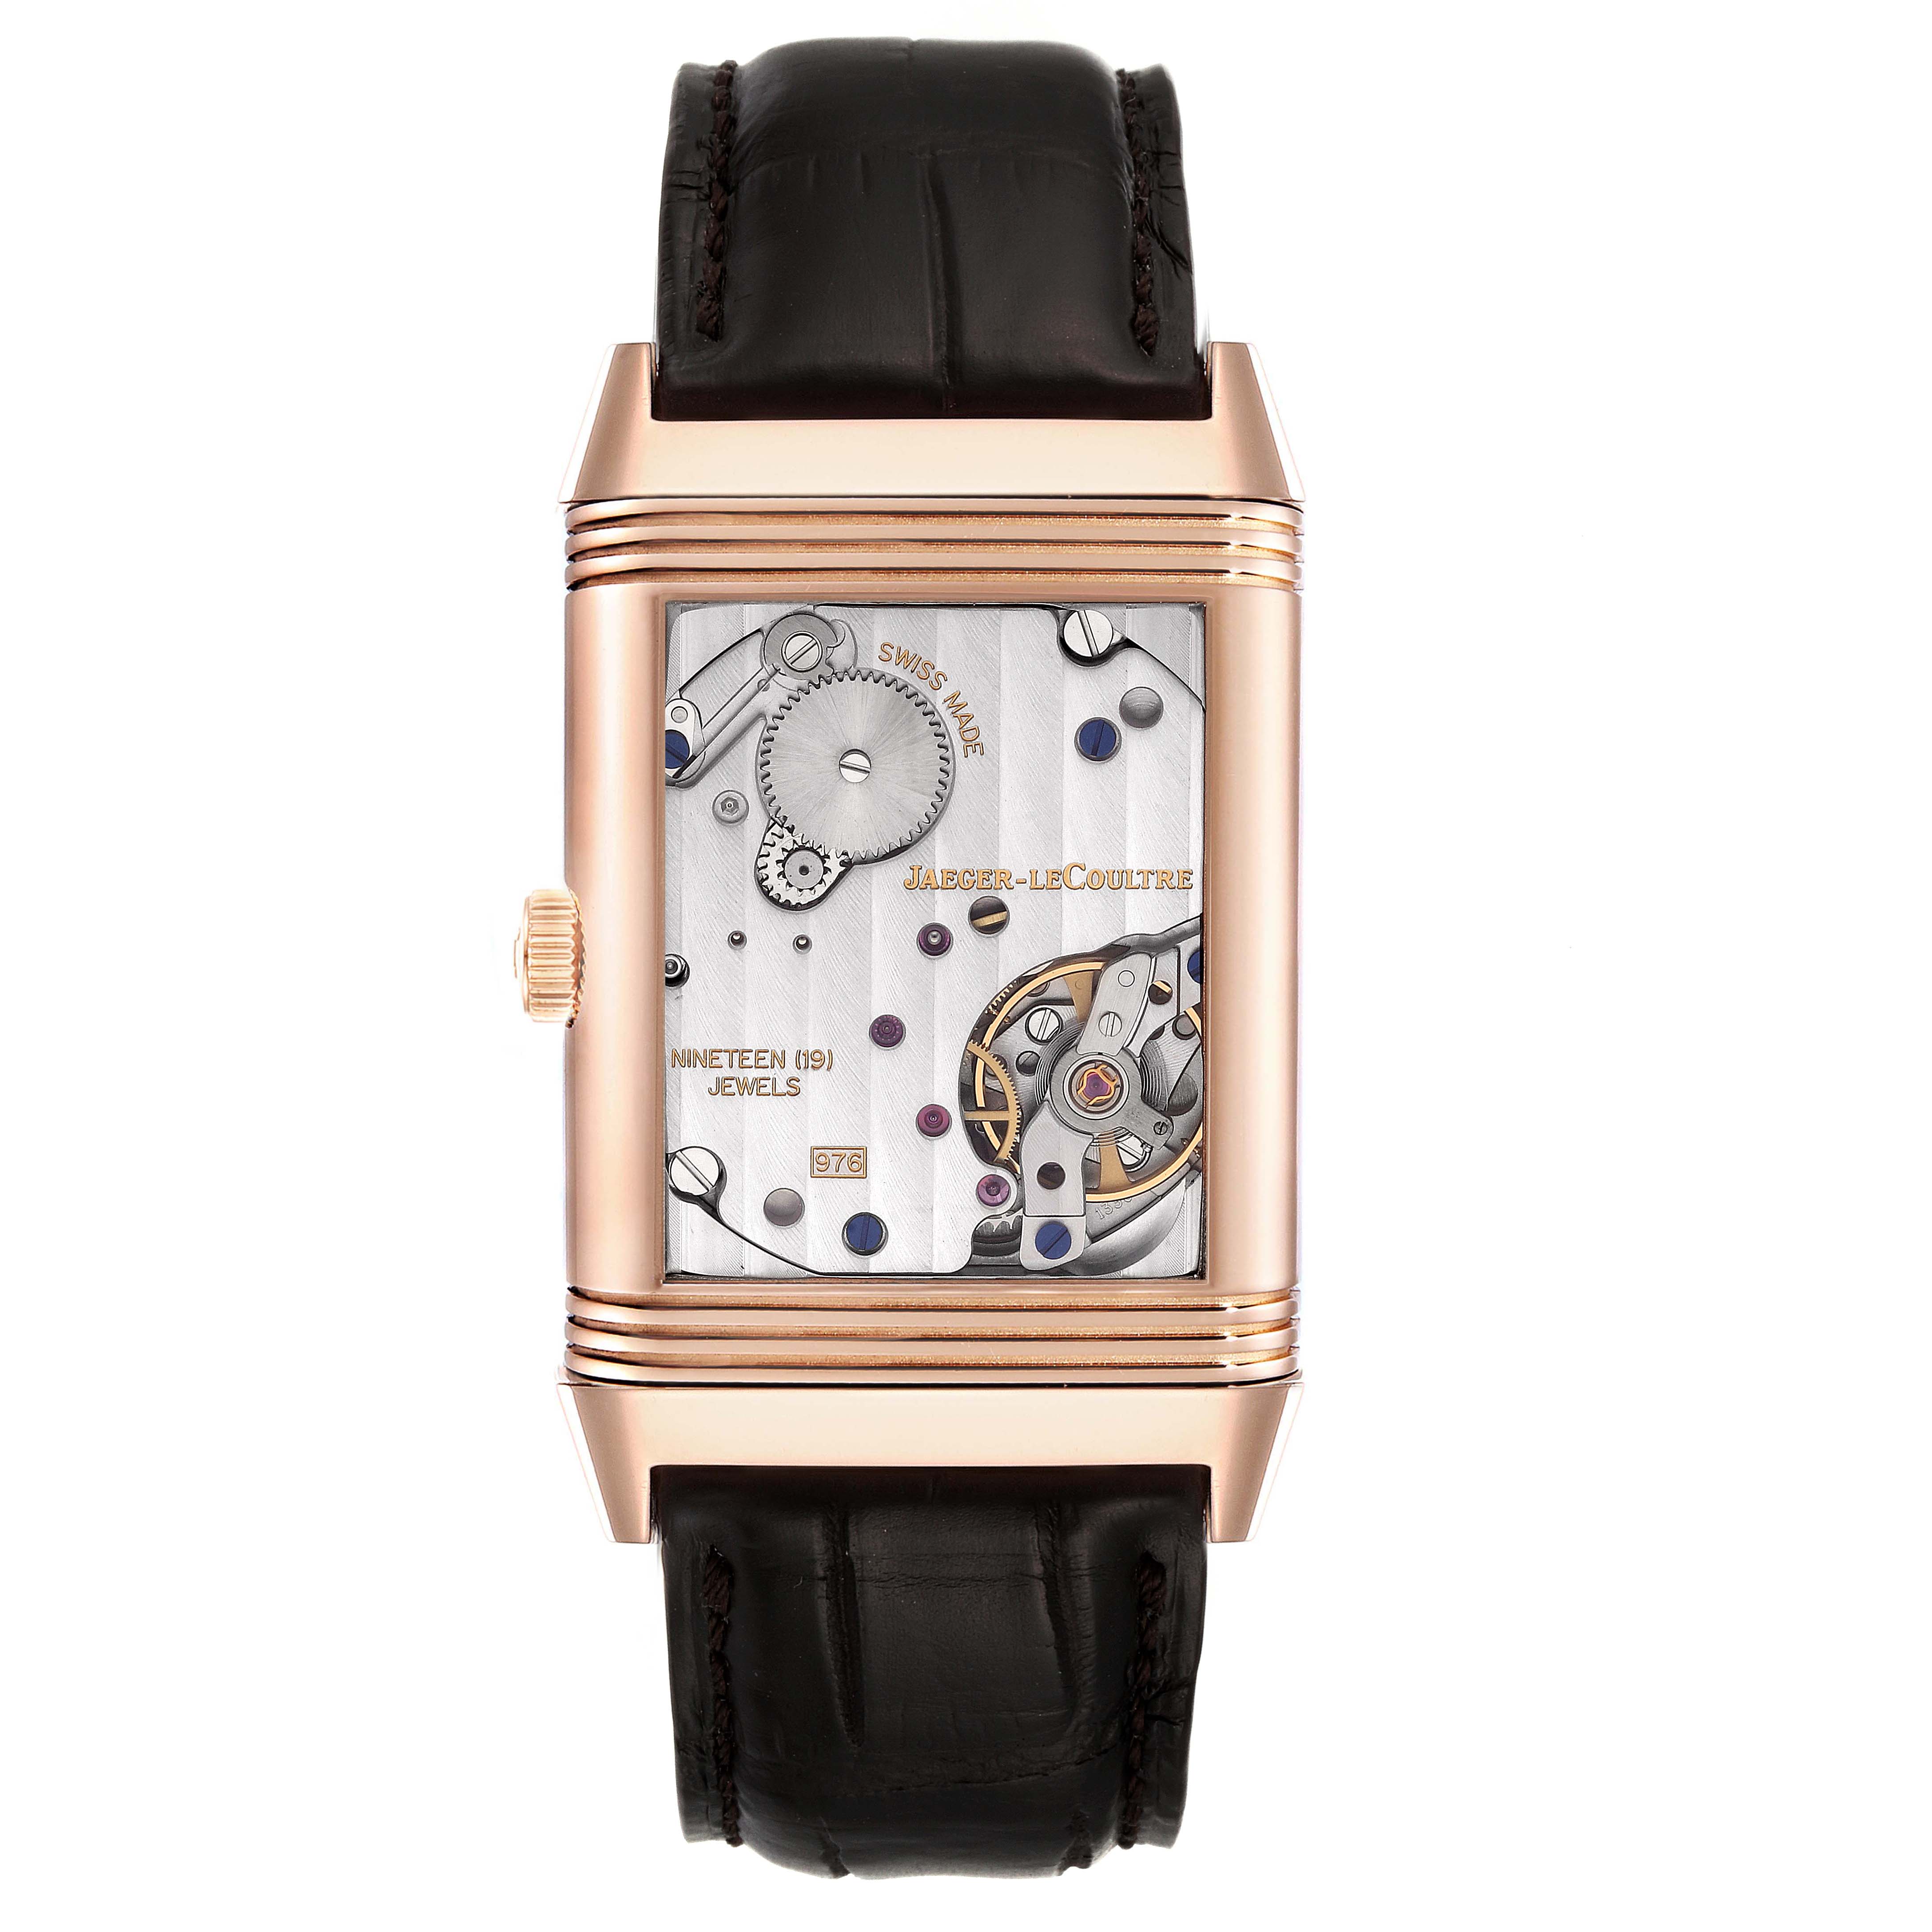 Jaeger LeCoultre Grande Reverso 976 Rose Gold Watch 273.2.04 Q3732420 ...